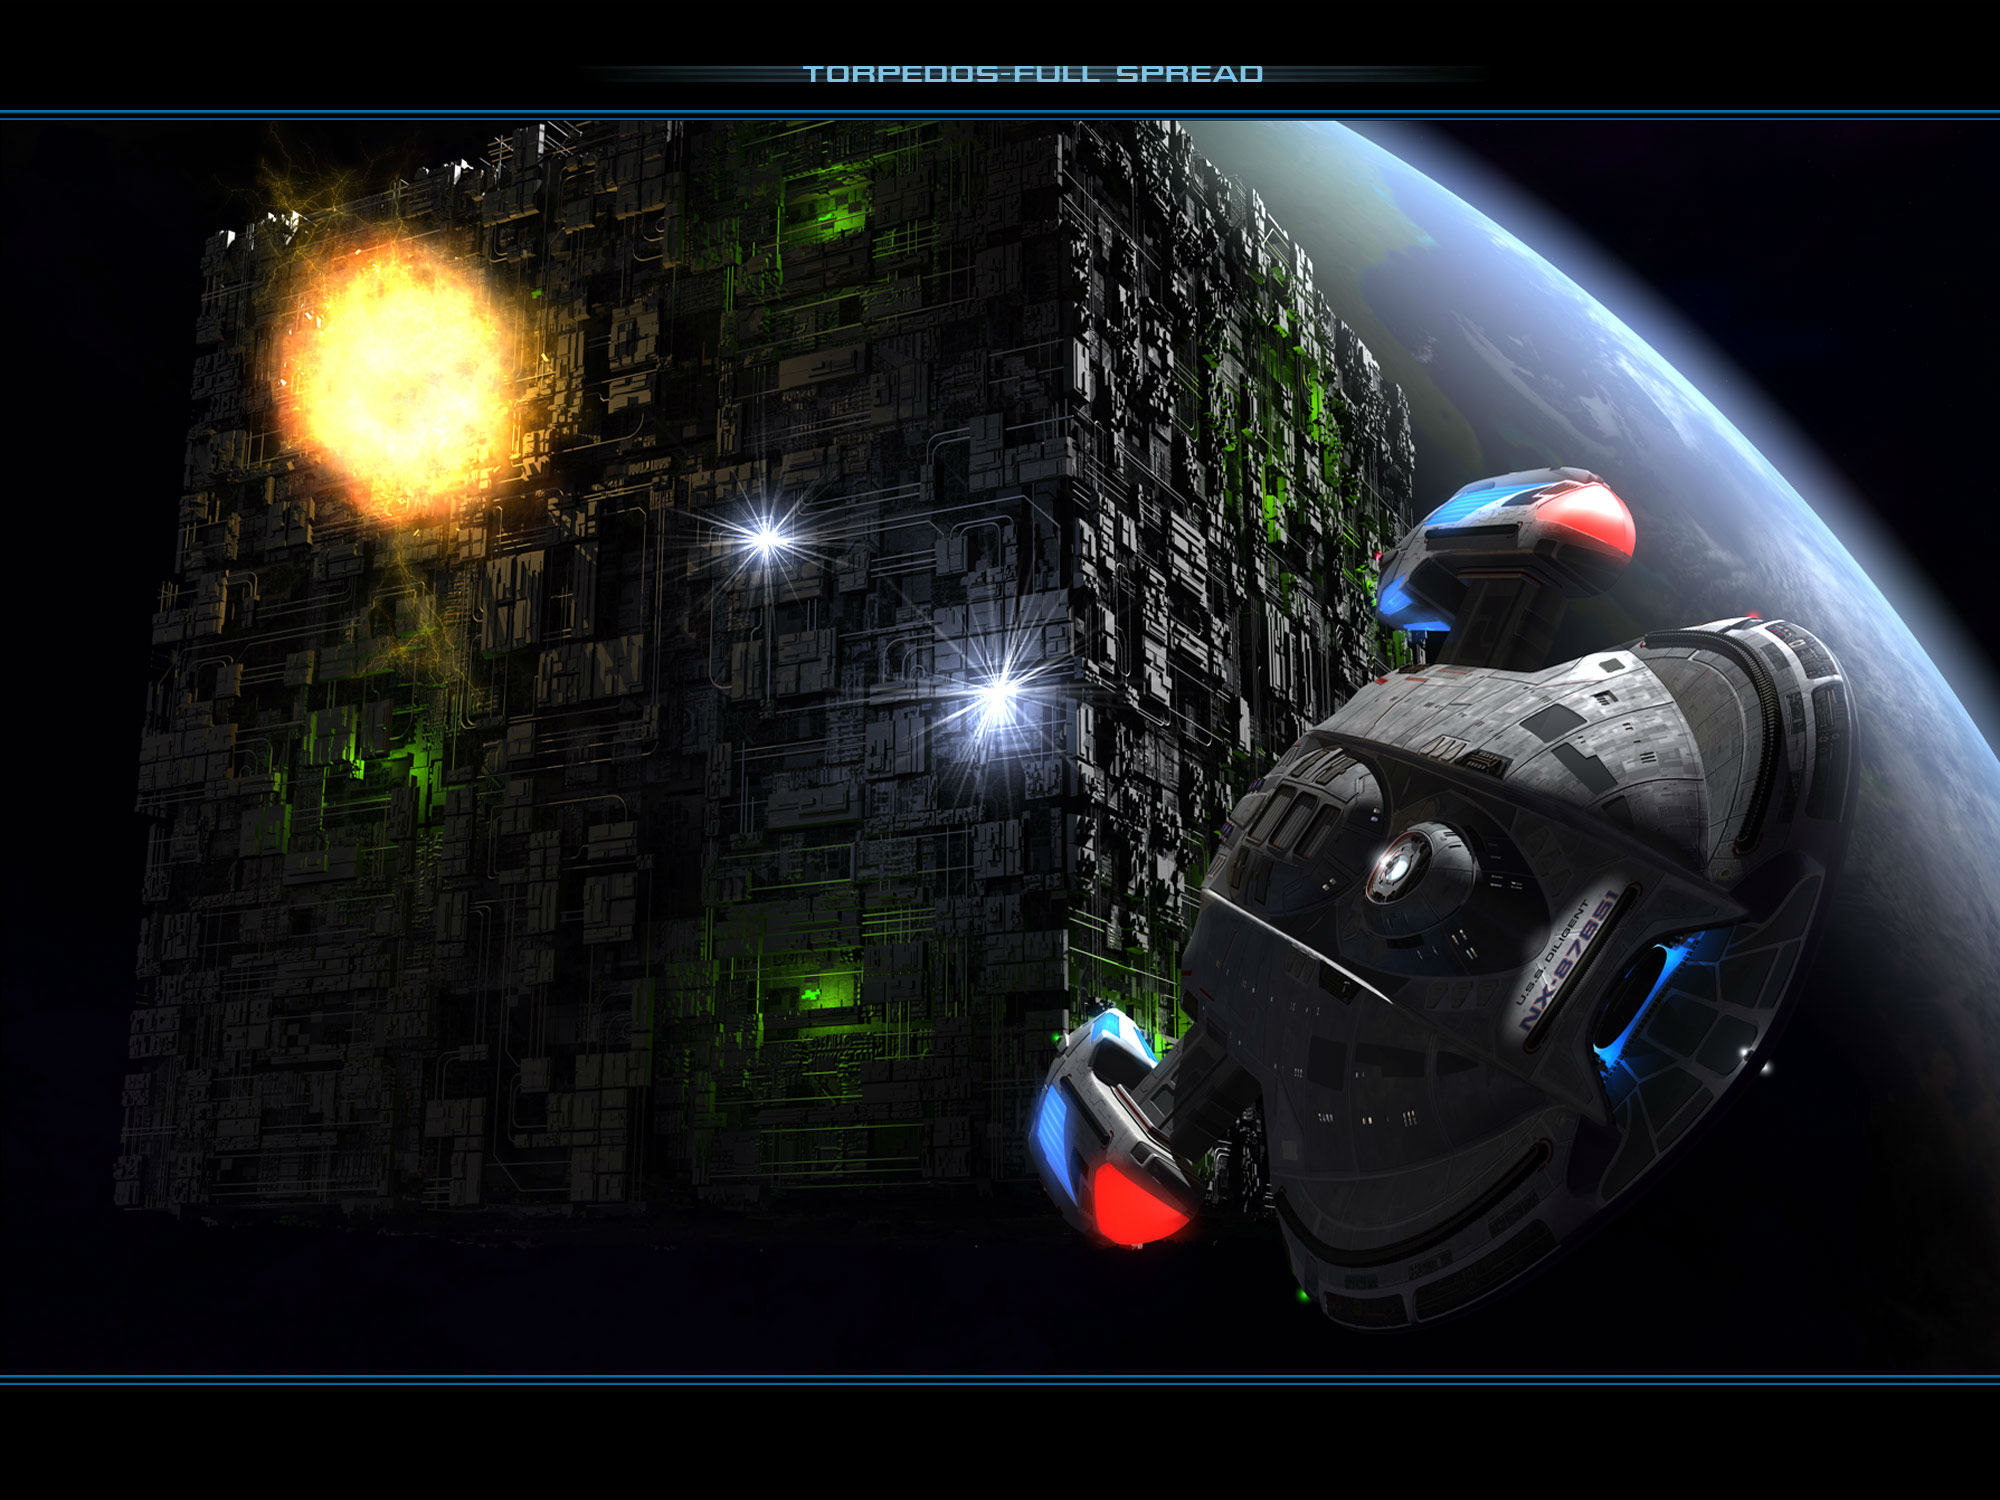 Borg Sci Fi Movies Video Games Battle Spacecraft Wallpaper Background